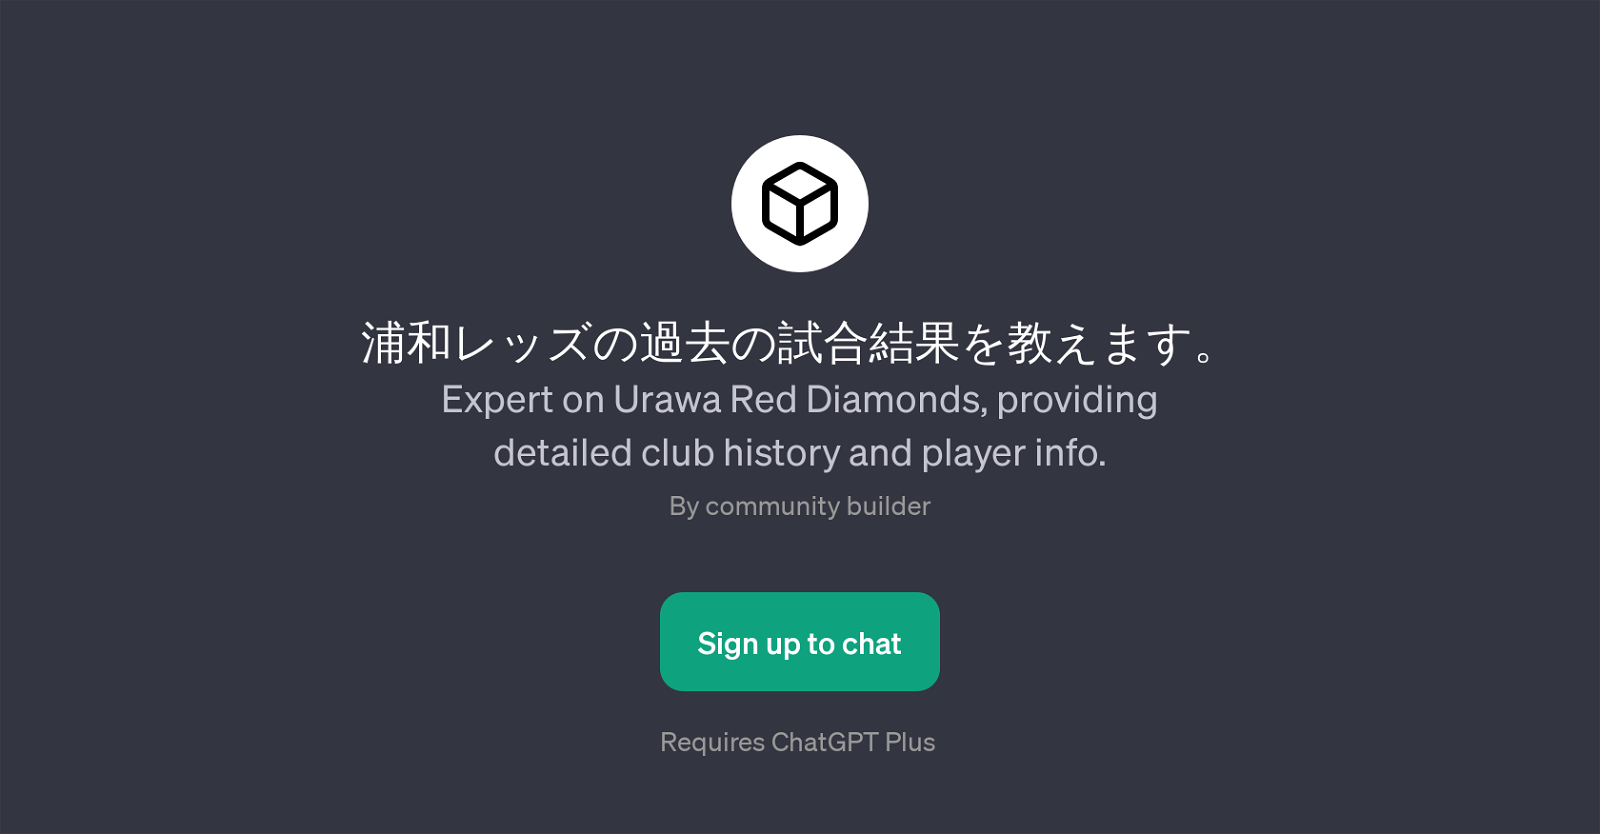 Expert on Urawa Red Diamonds website